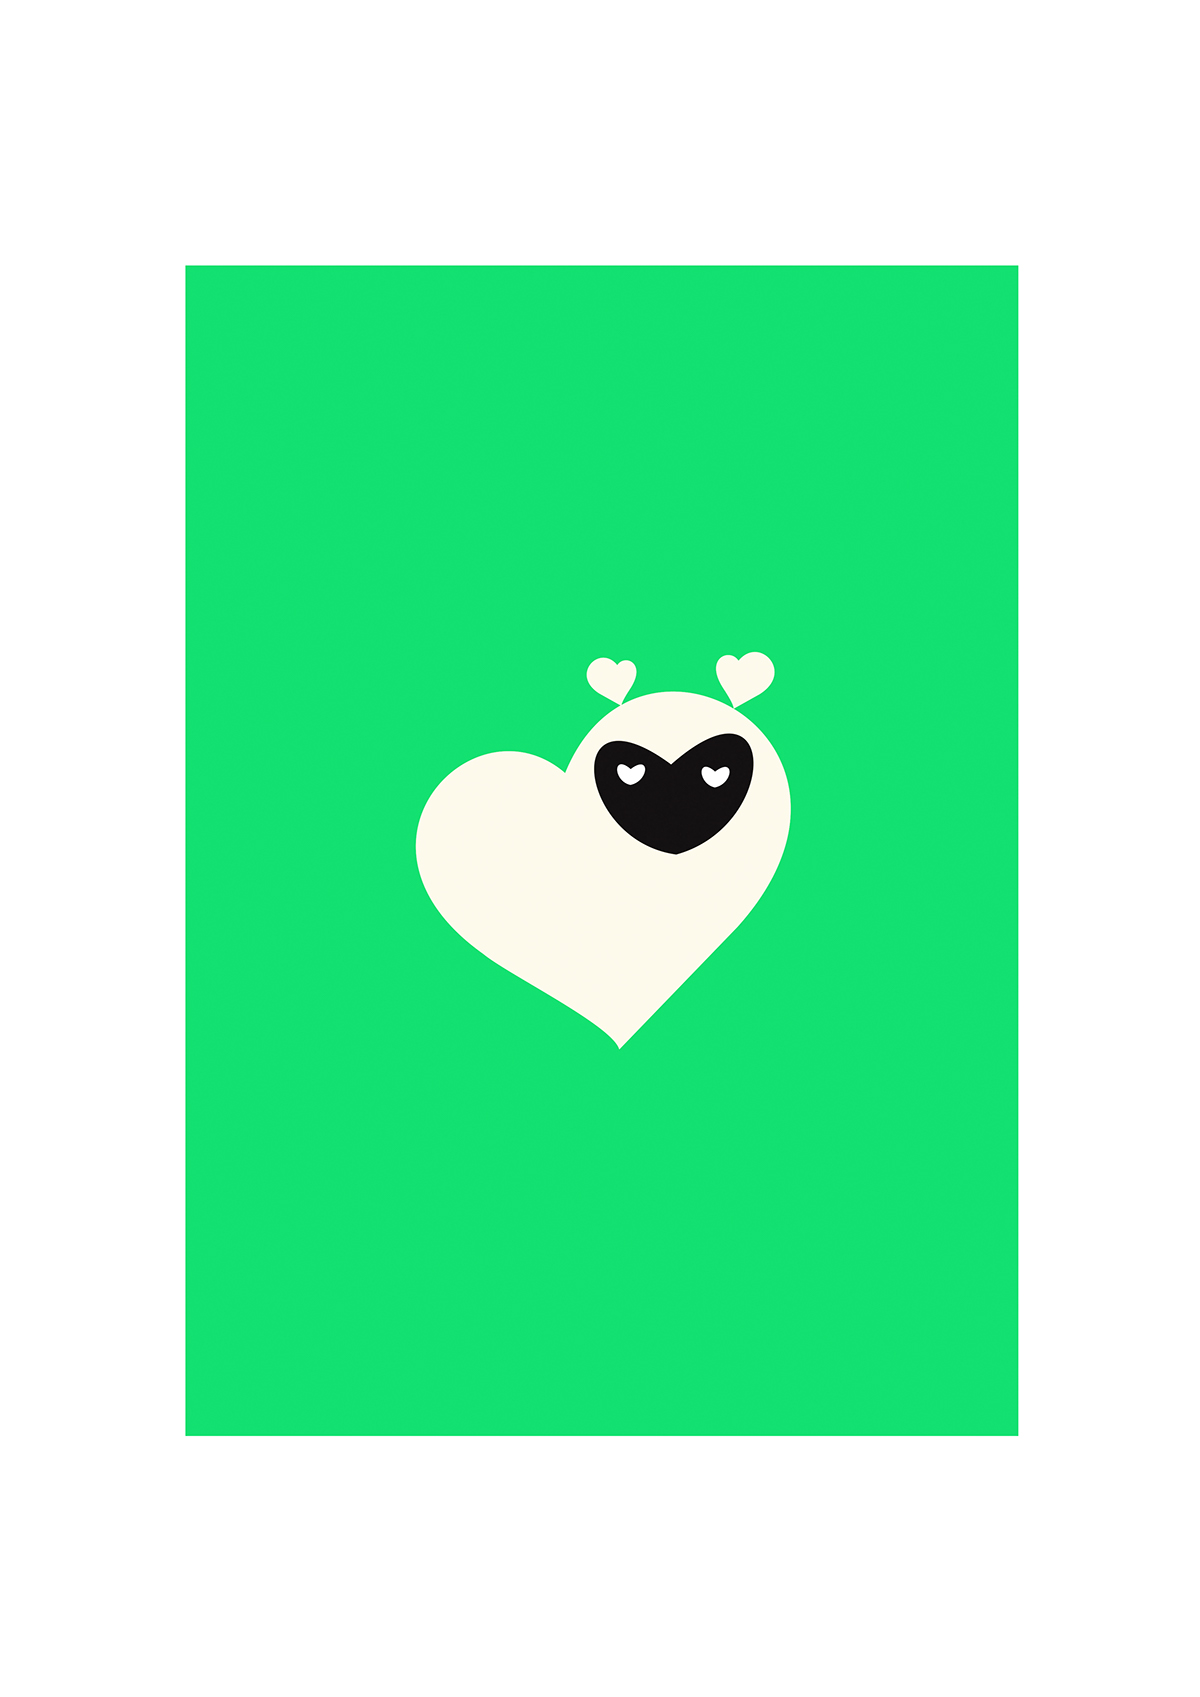 hearties made from heart Minimalism minimalist animal design Minimalist illustrations minimalist graphic design merchandising heart shape graphics gorilla heart